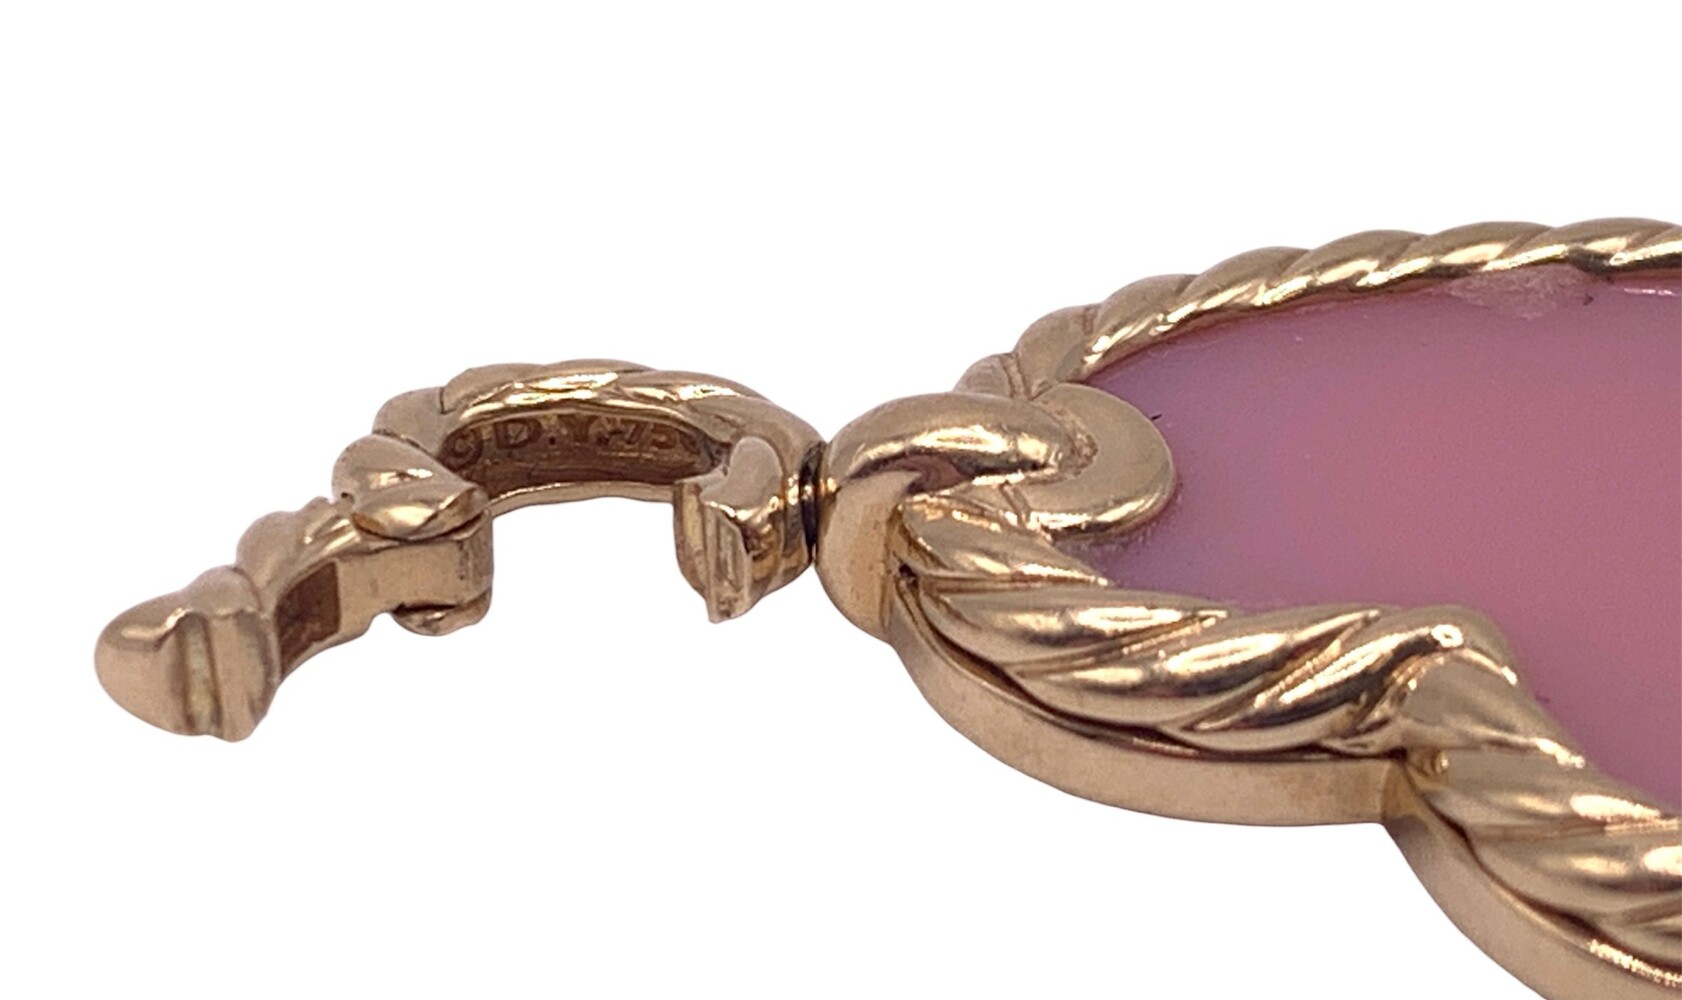  David Yurman Elements Heart Amulet with Pink Opal & Diamonds 18k 750